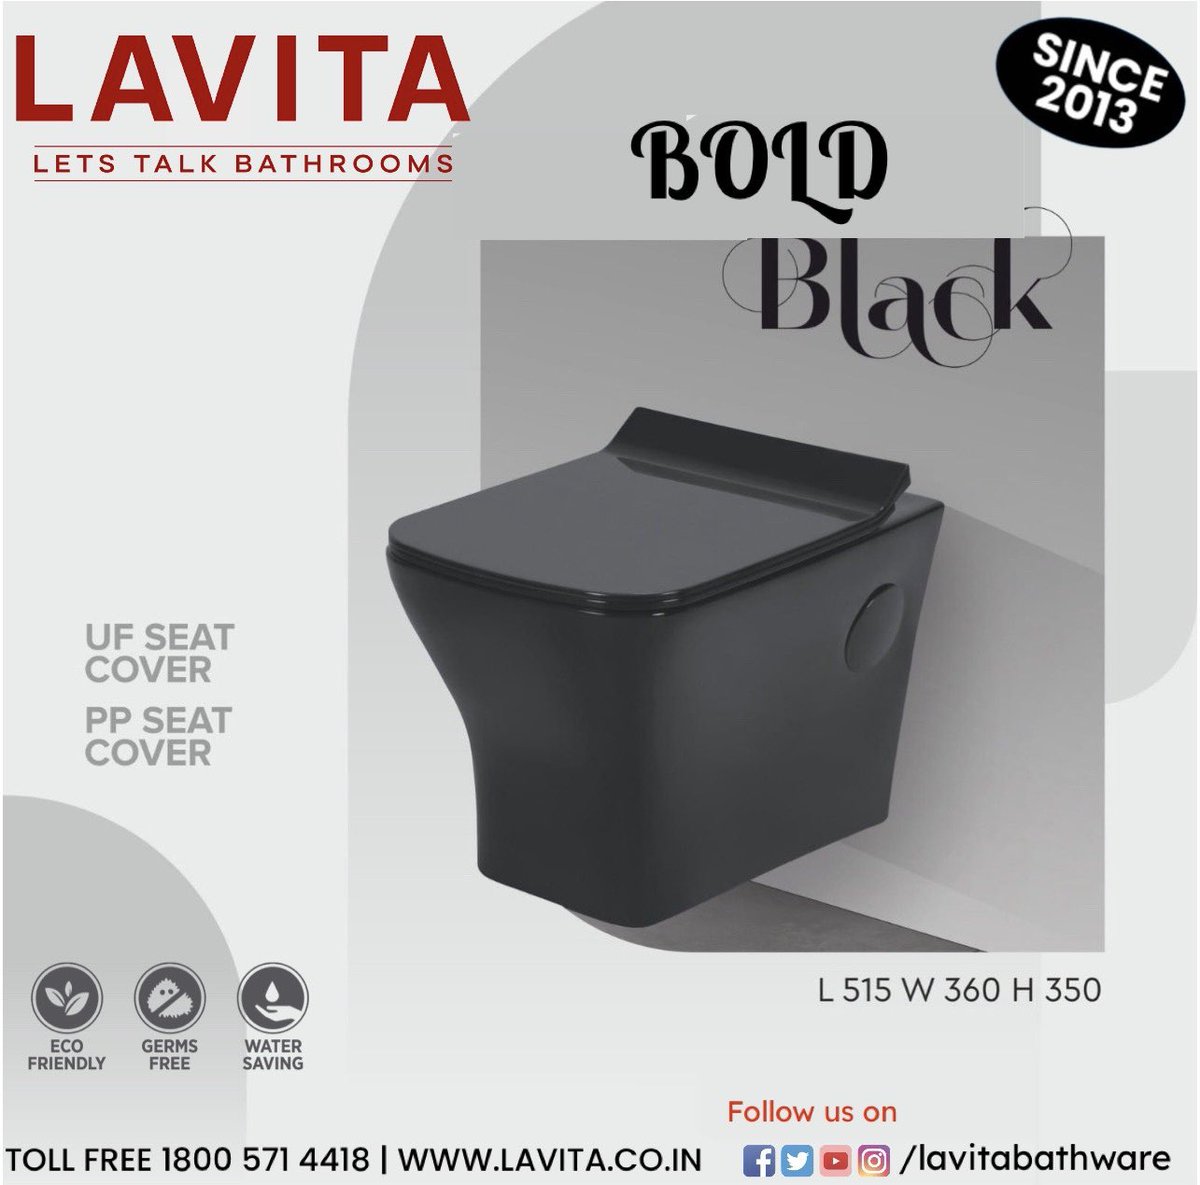 #lavitabathware #lavita #BoldBlack #classy #premiumsanitaryware #11yearsguarantee #wallhungtoilet #artcollection #bathroomdesign